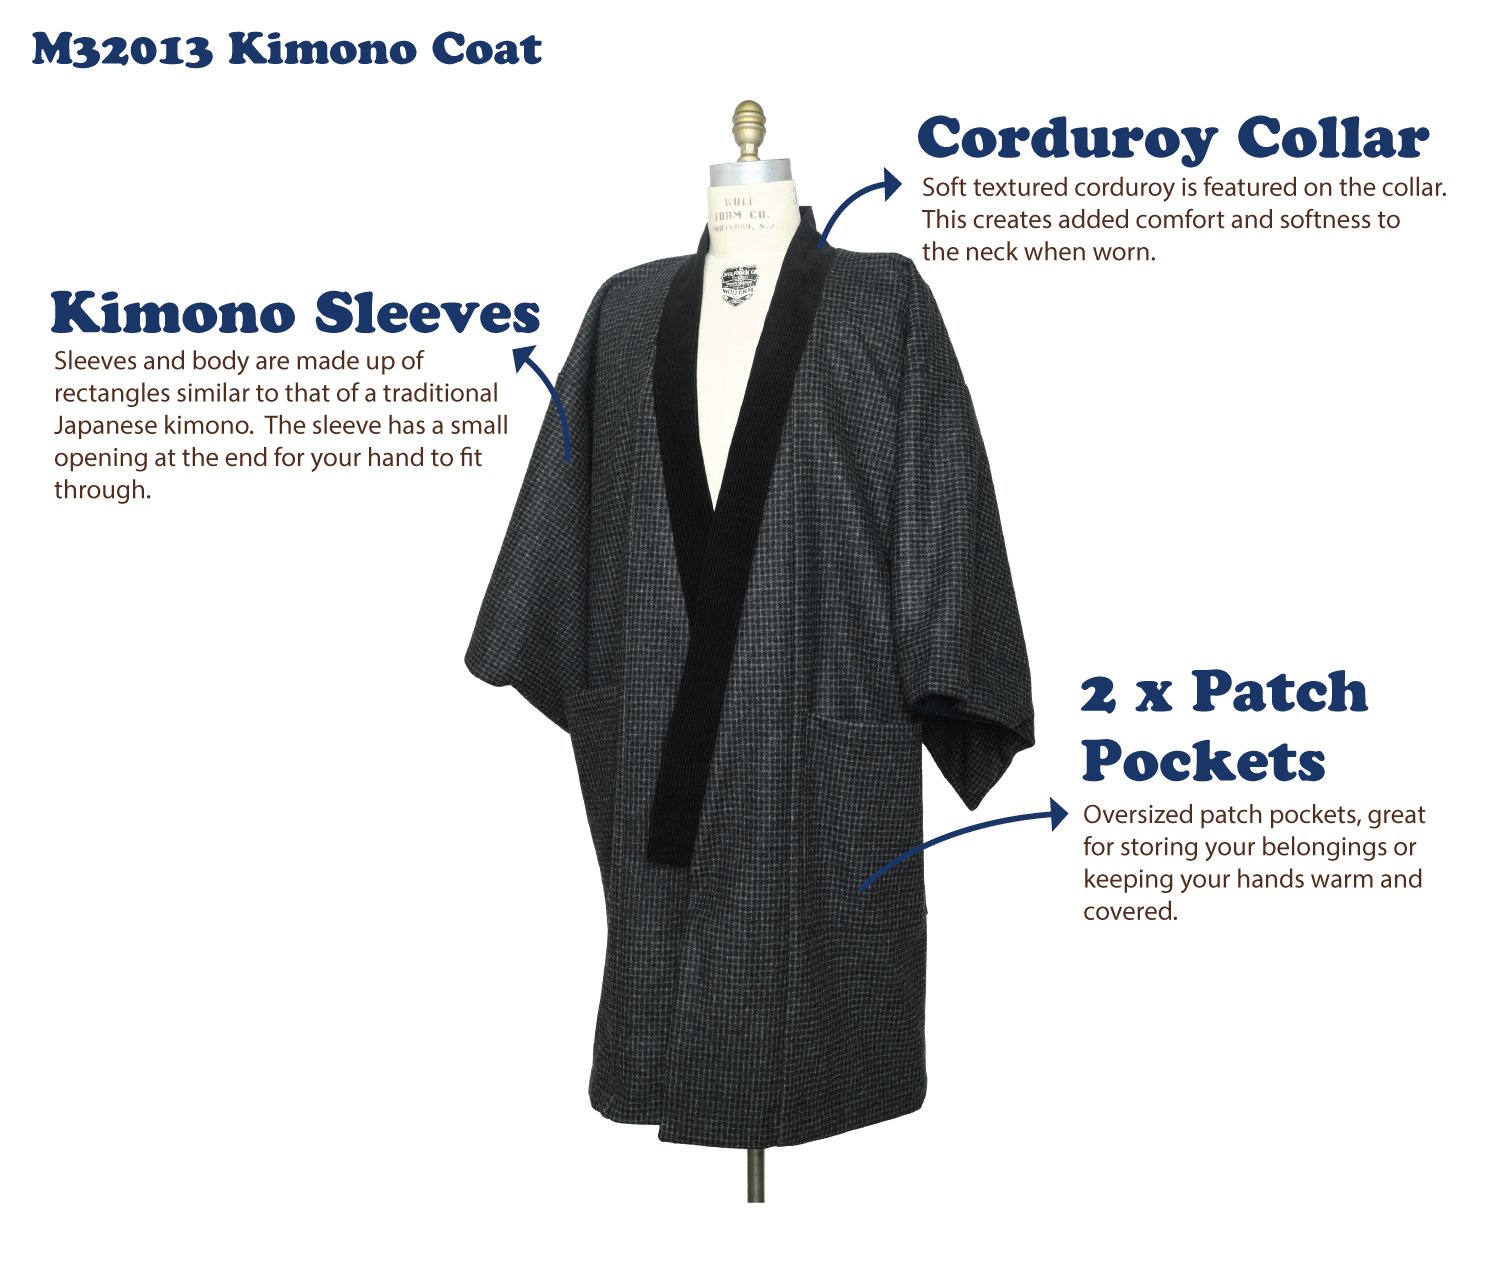 M32013-Kimono-Coat.jpg